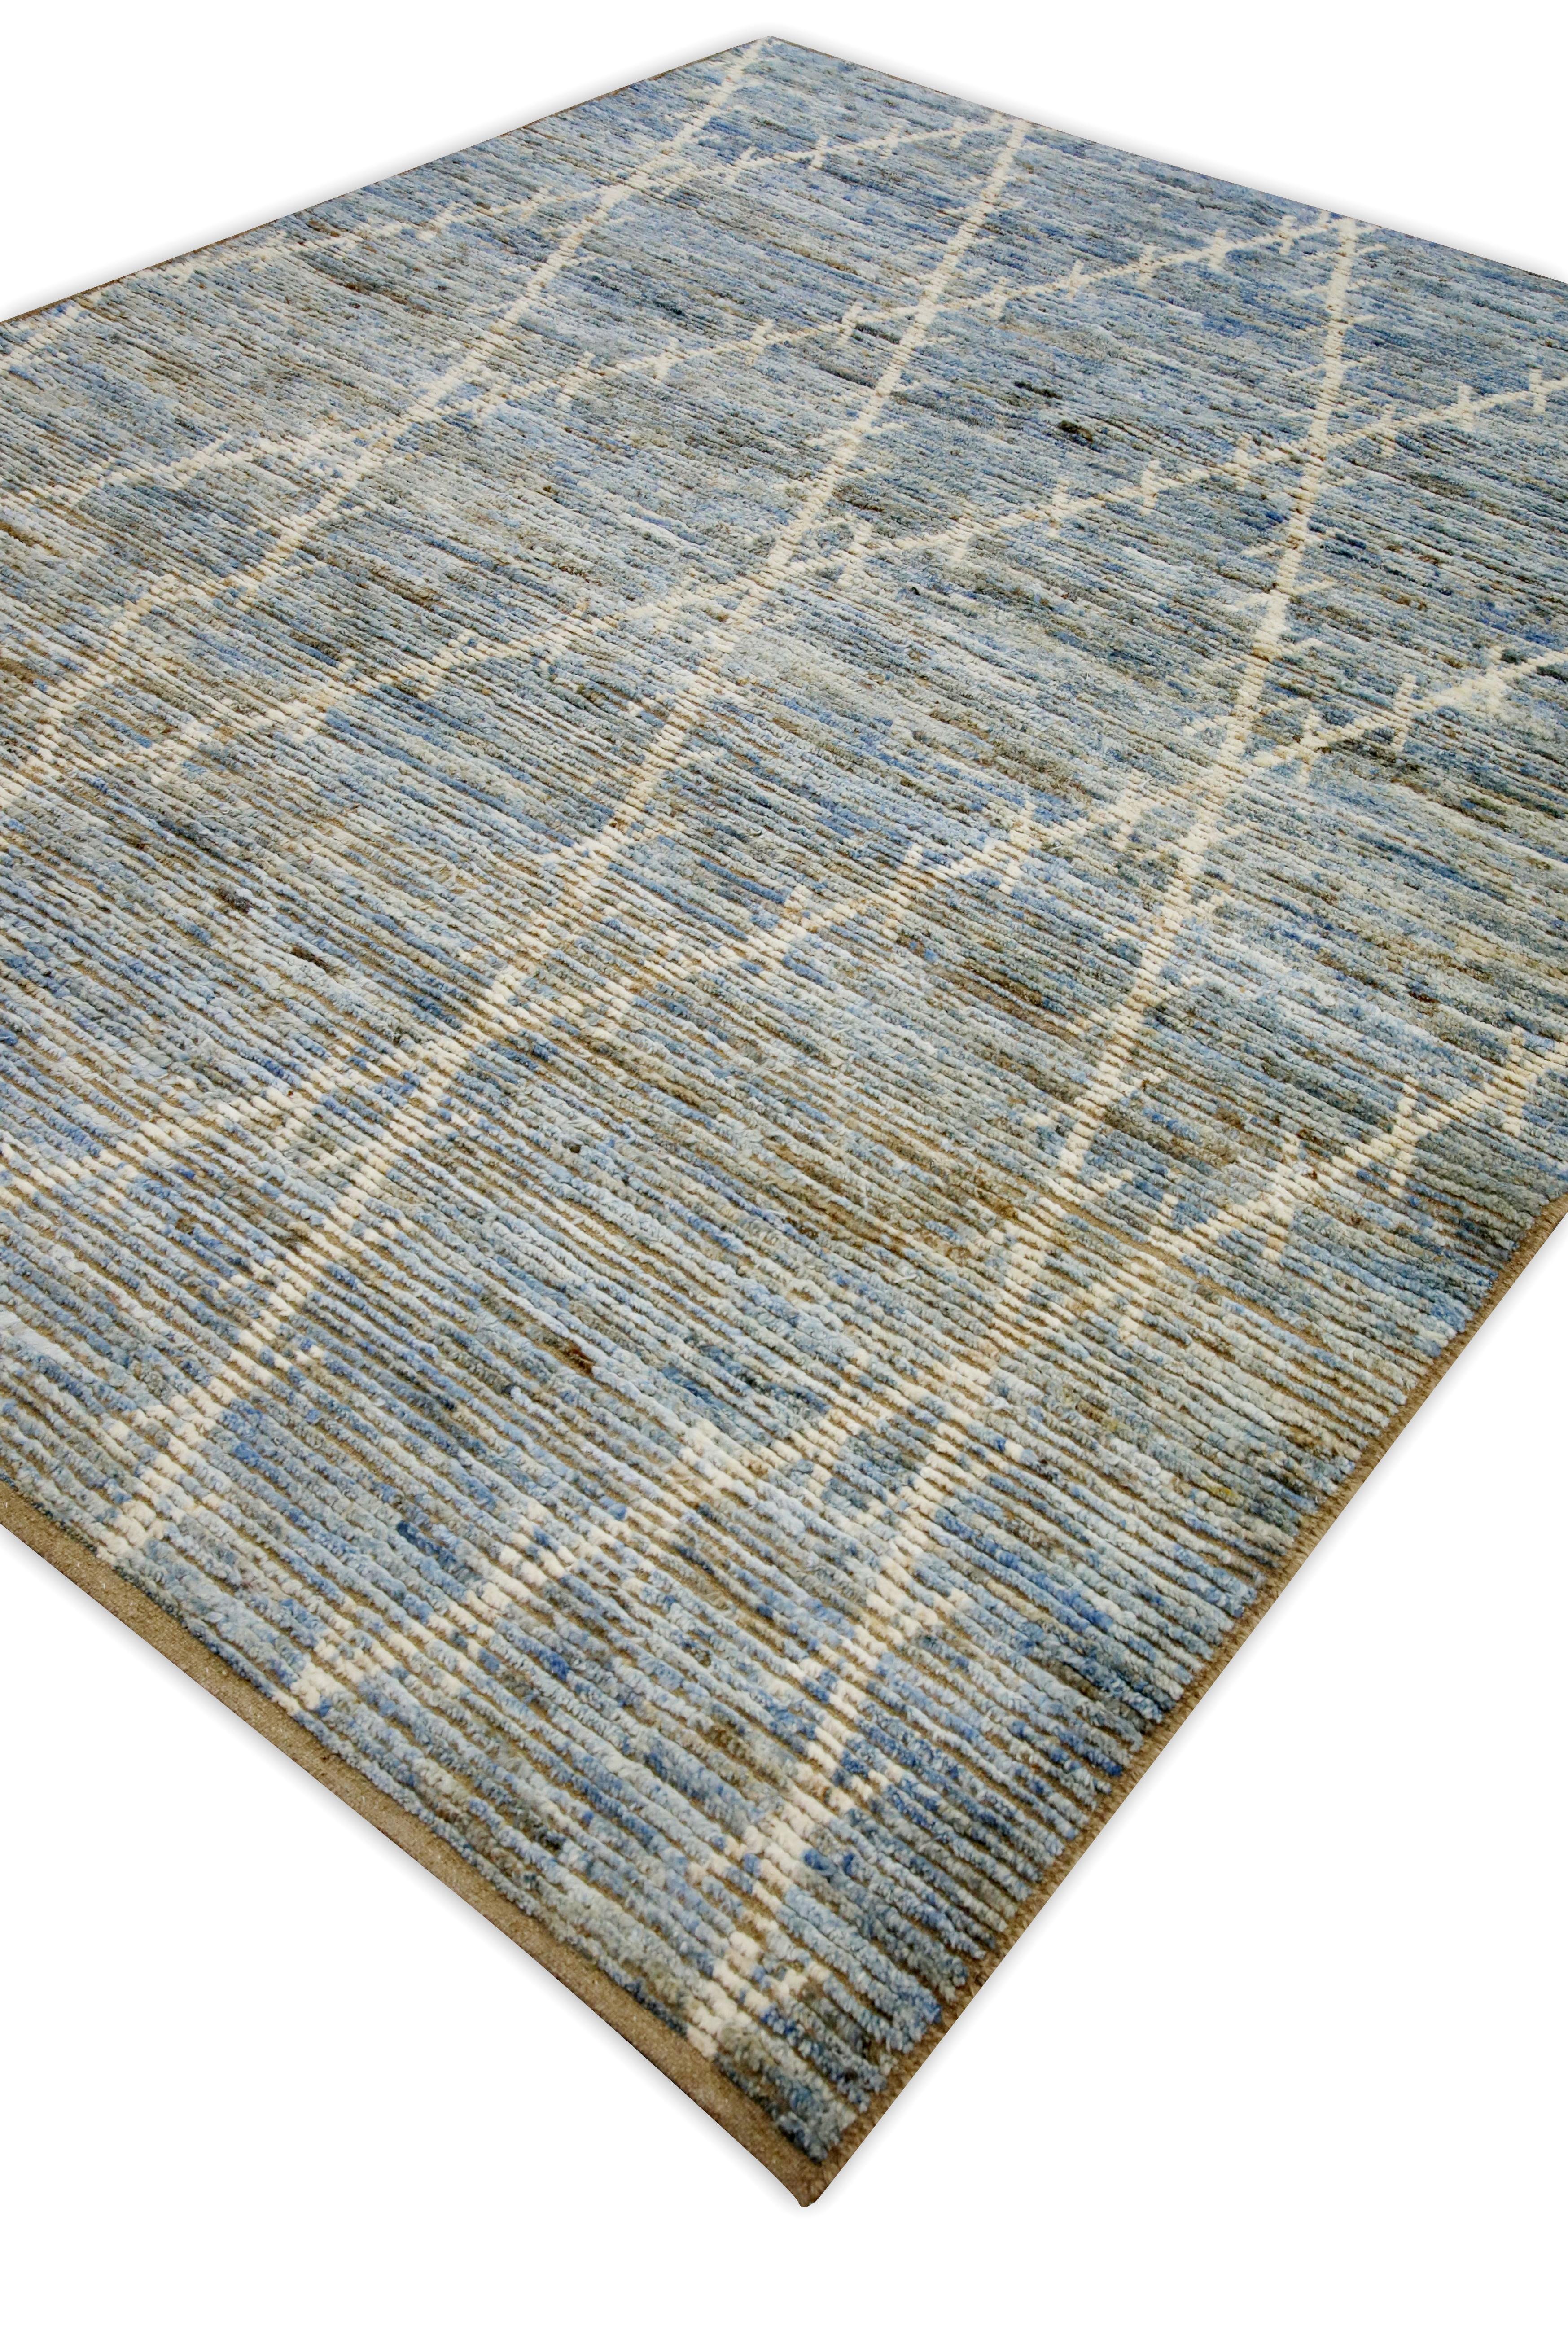 Contemporary Brown & Blue Handmade Wool Modern Turkish Rug in Geometric Design 7'11